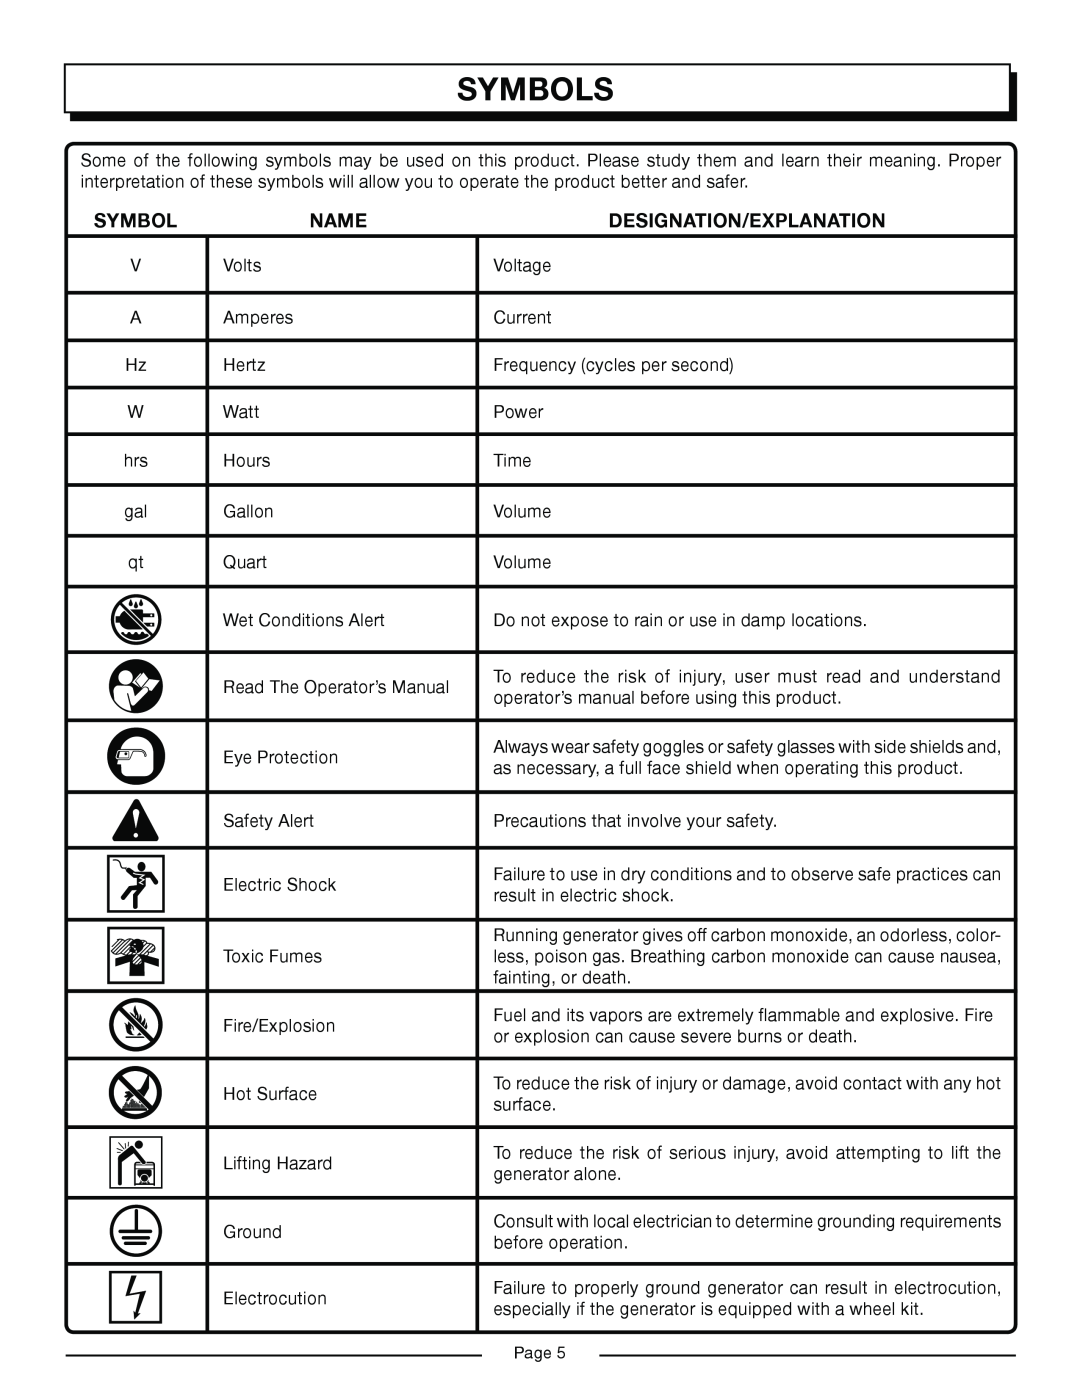 Homelite HG6000 manual Symbols, Name, Designation/Explanation 